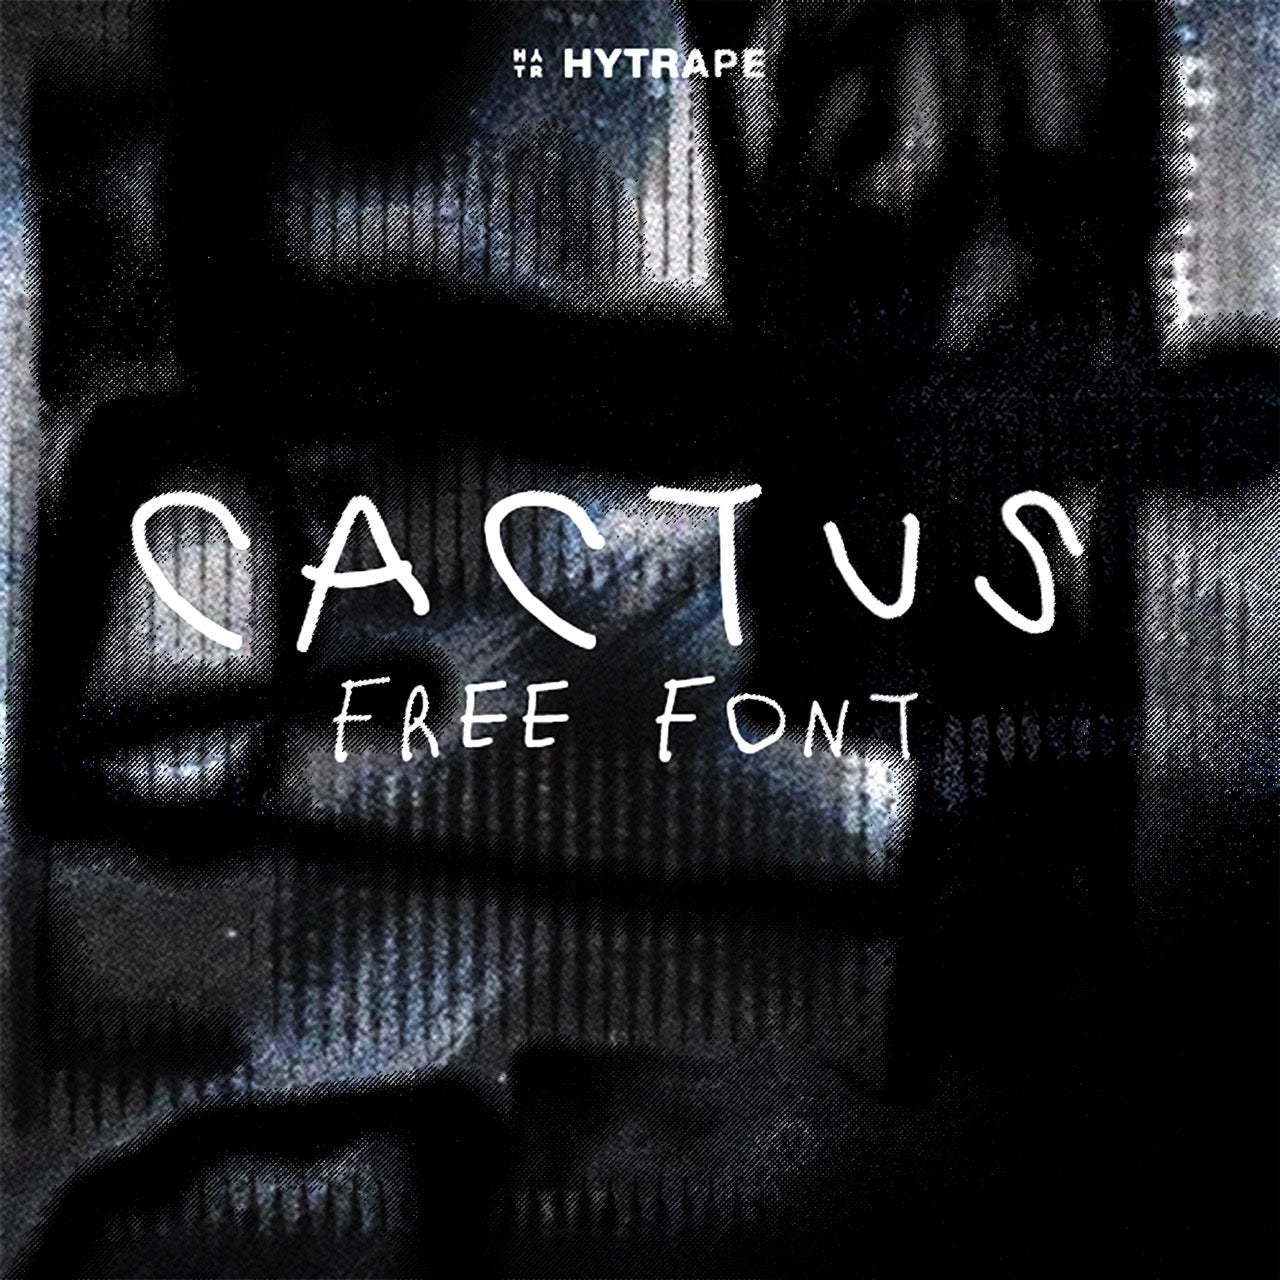 CACTUS FONT (FREE) HYTRAPE